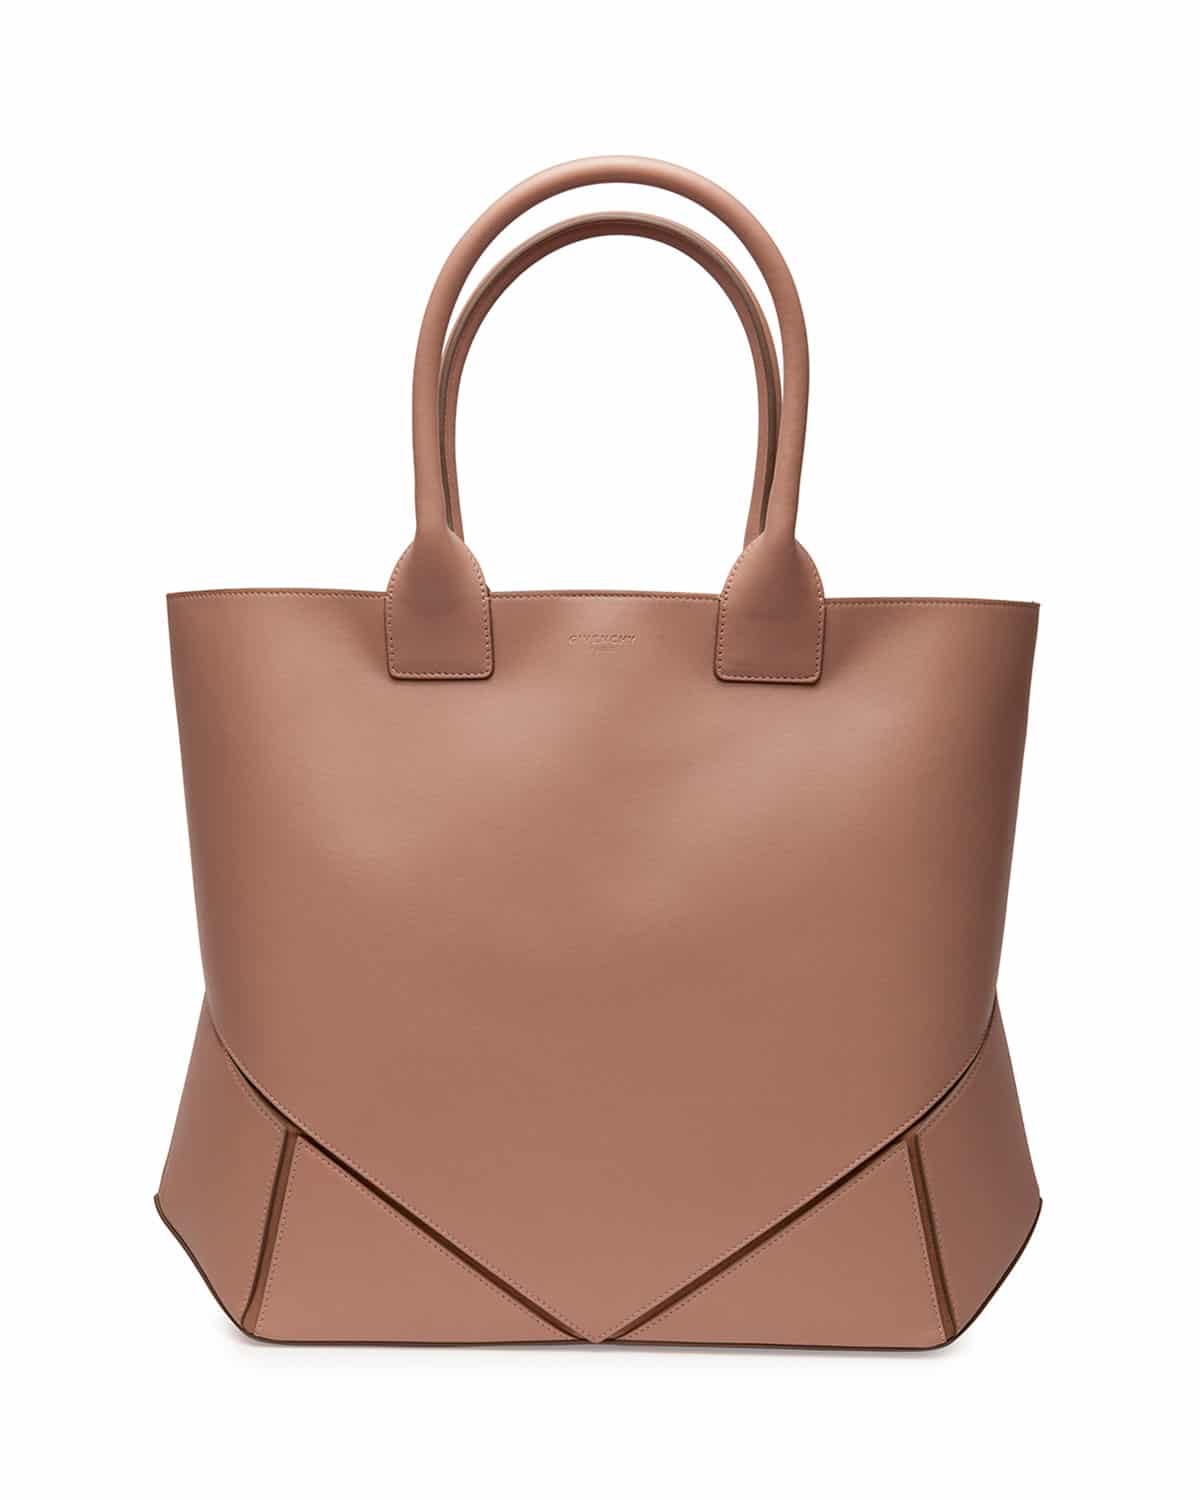 Origami сумка Loewe. Сумка Givenchy бежевая женская. Guess Bag Light Pink. Medium leather